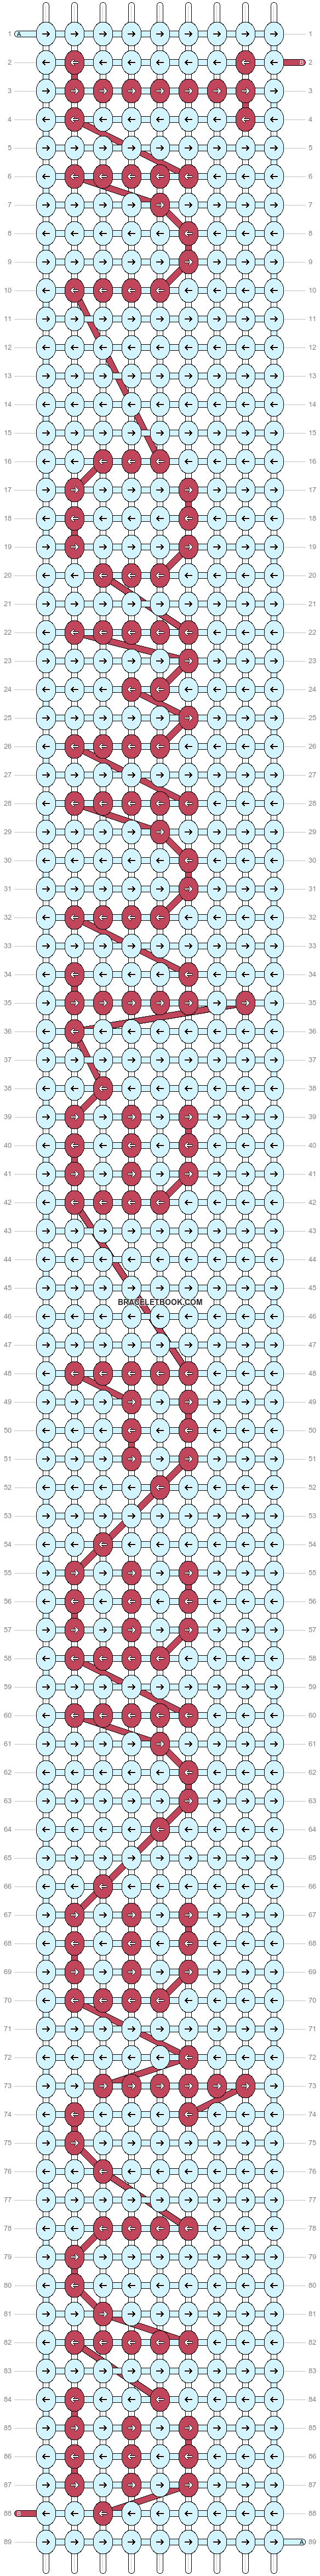 Alpha pattern #20752 variation #11425 pattern